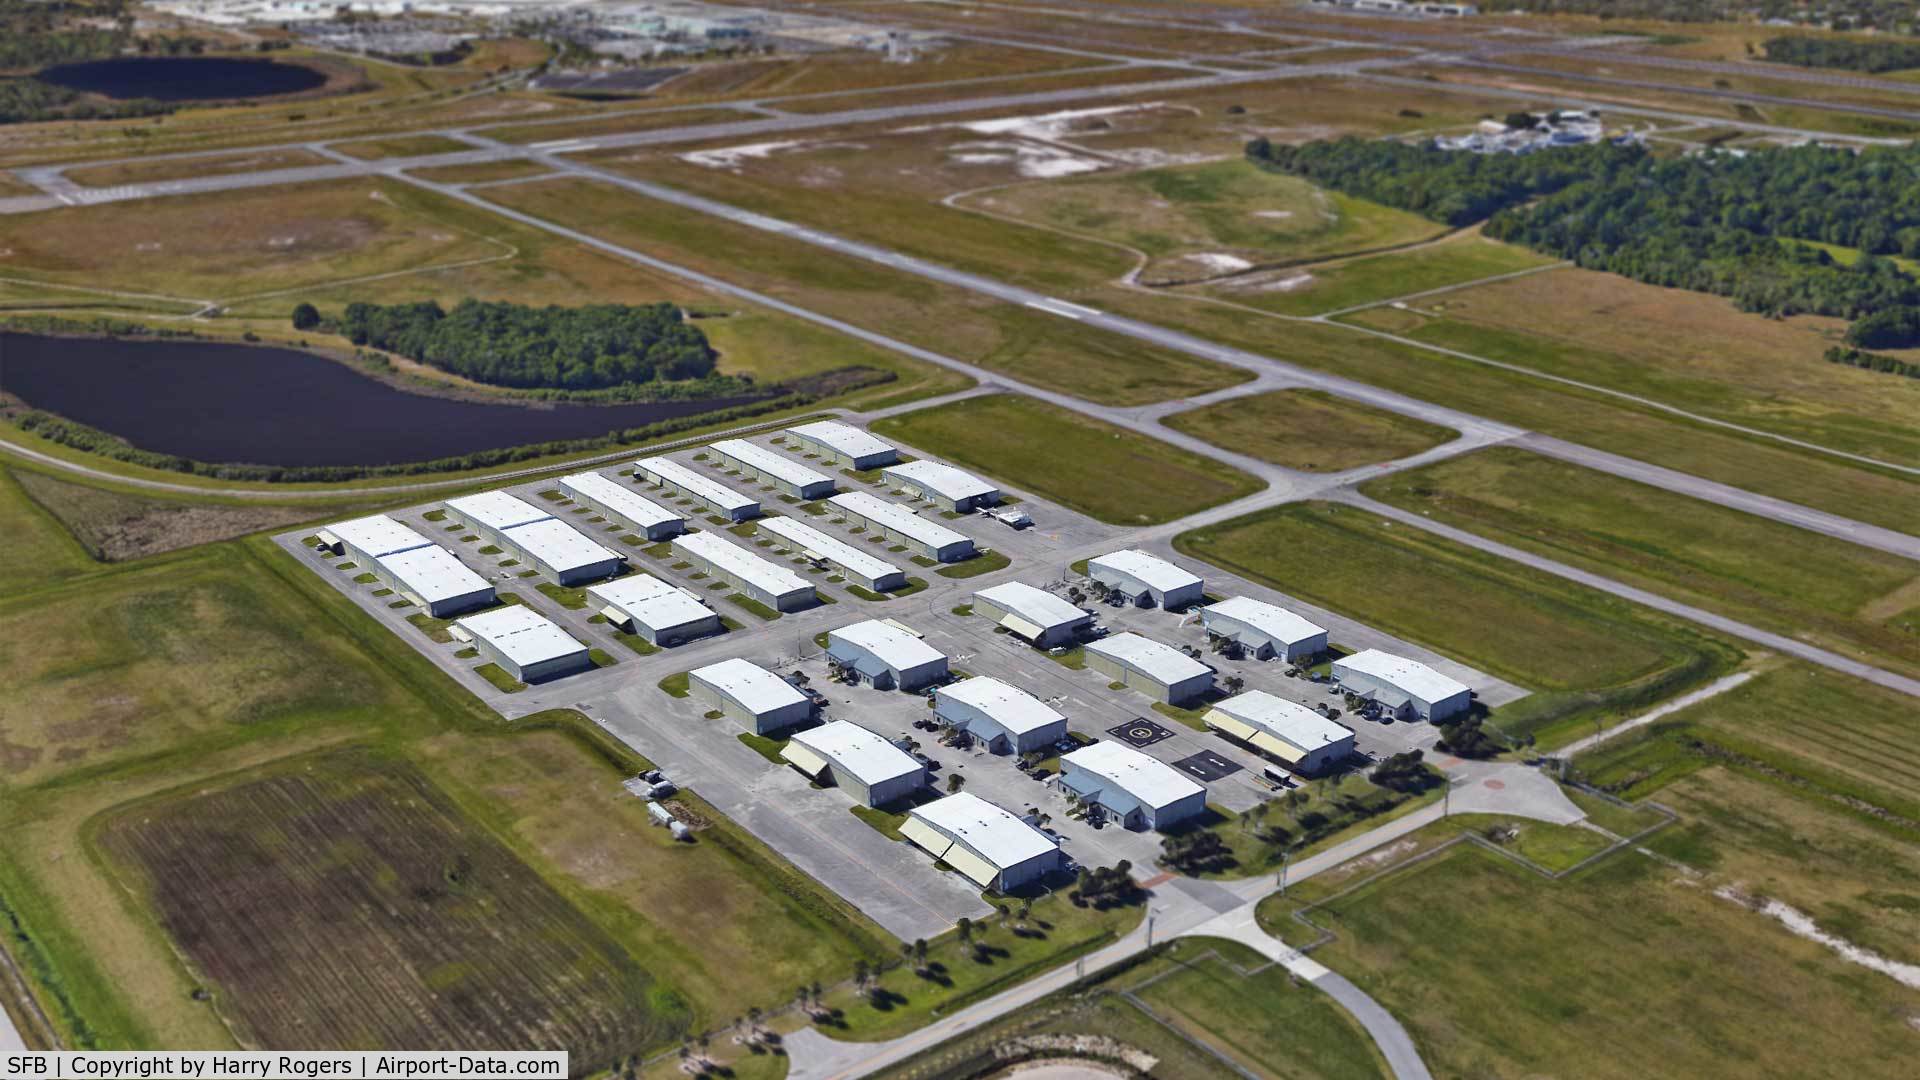 Orlando Sanford International Airport (SFB) - South East Ramp hangar facility